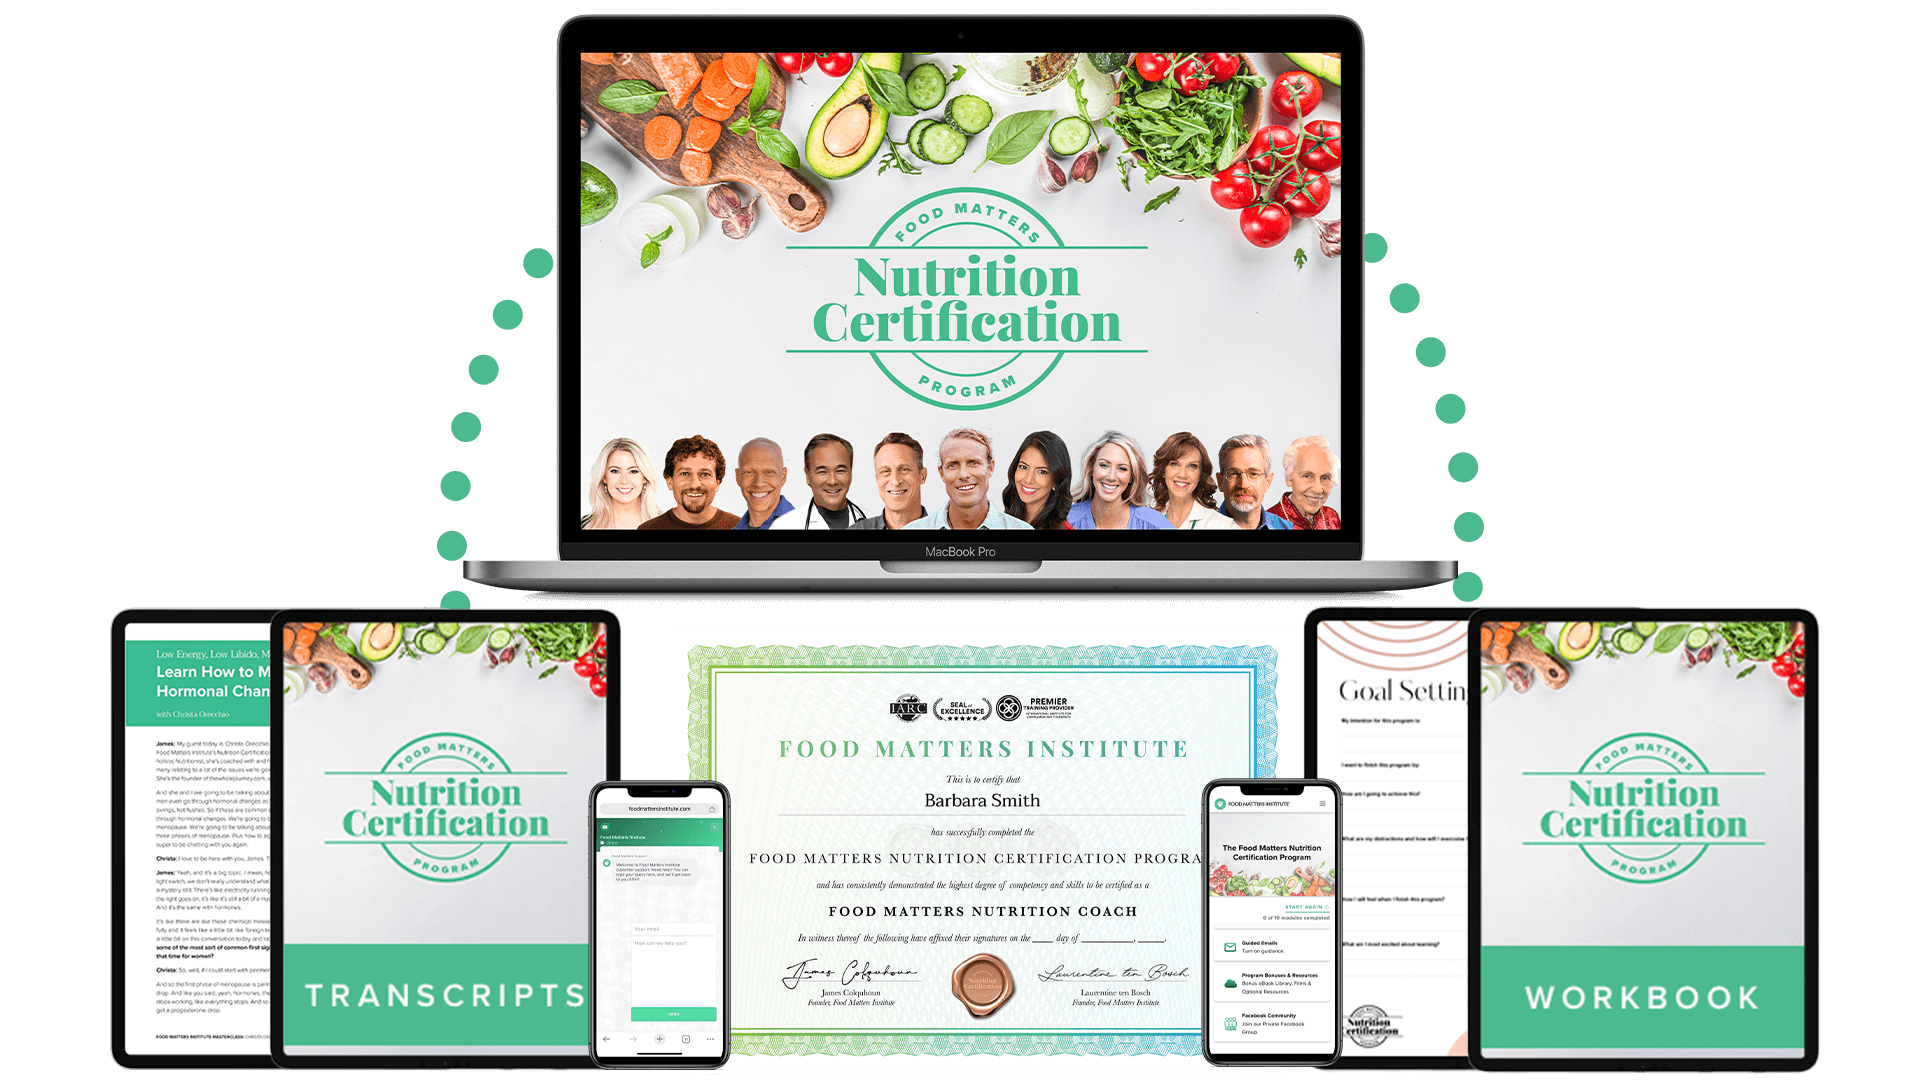 The Food Matters Nutrition Certification Program